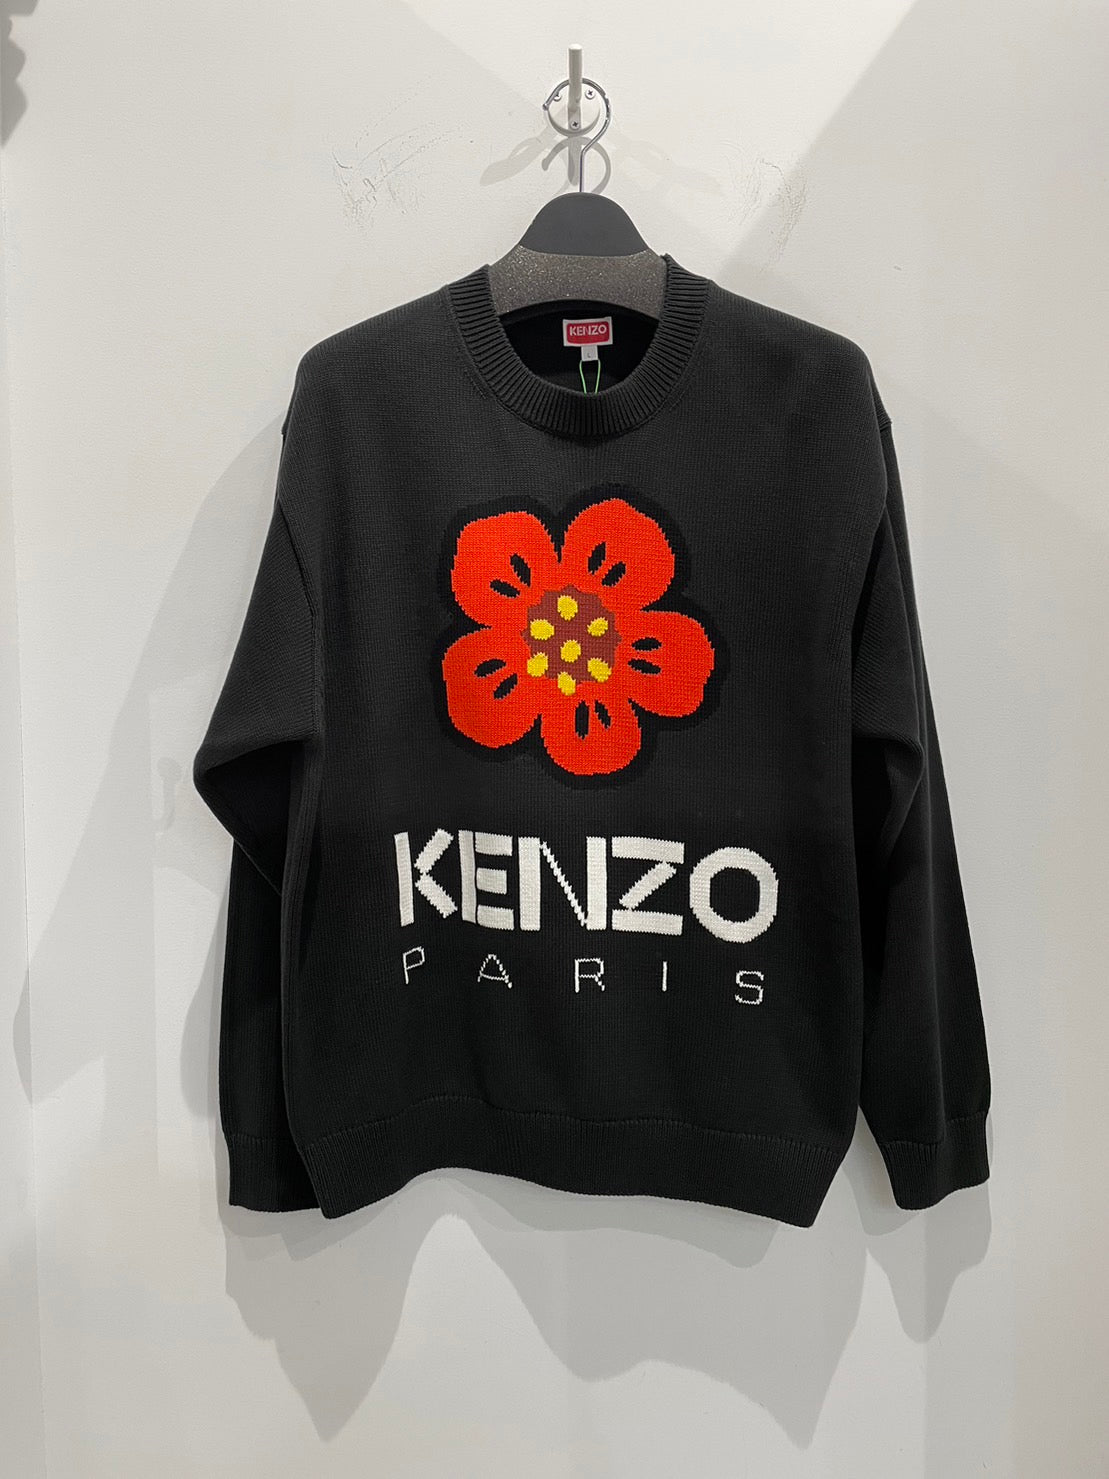 KENZO/ケンゾー ニット/セーター ニット ブラック メンズファッション